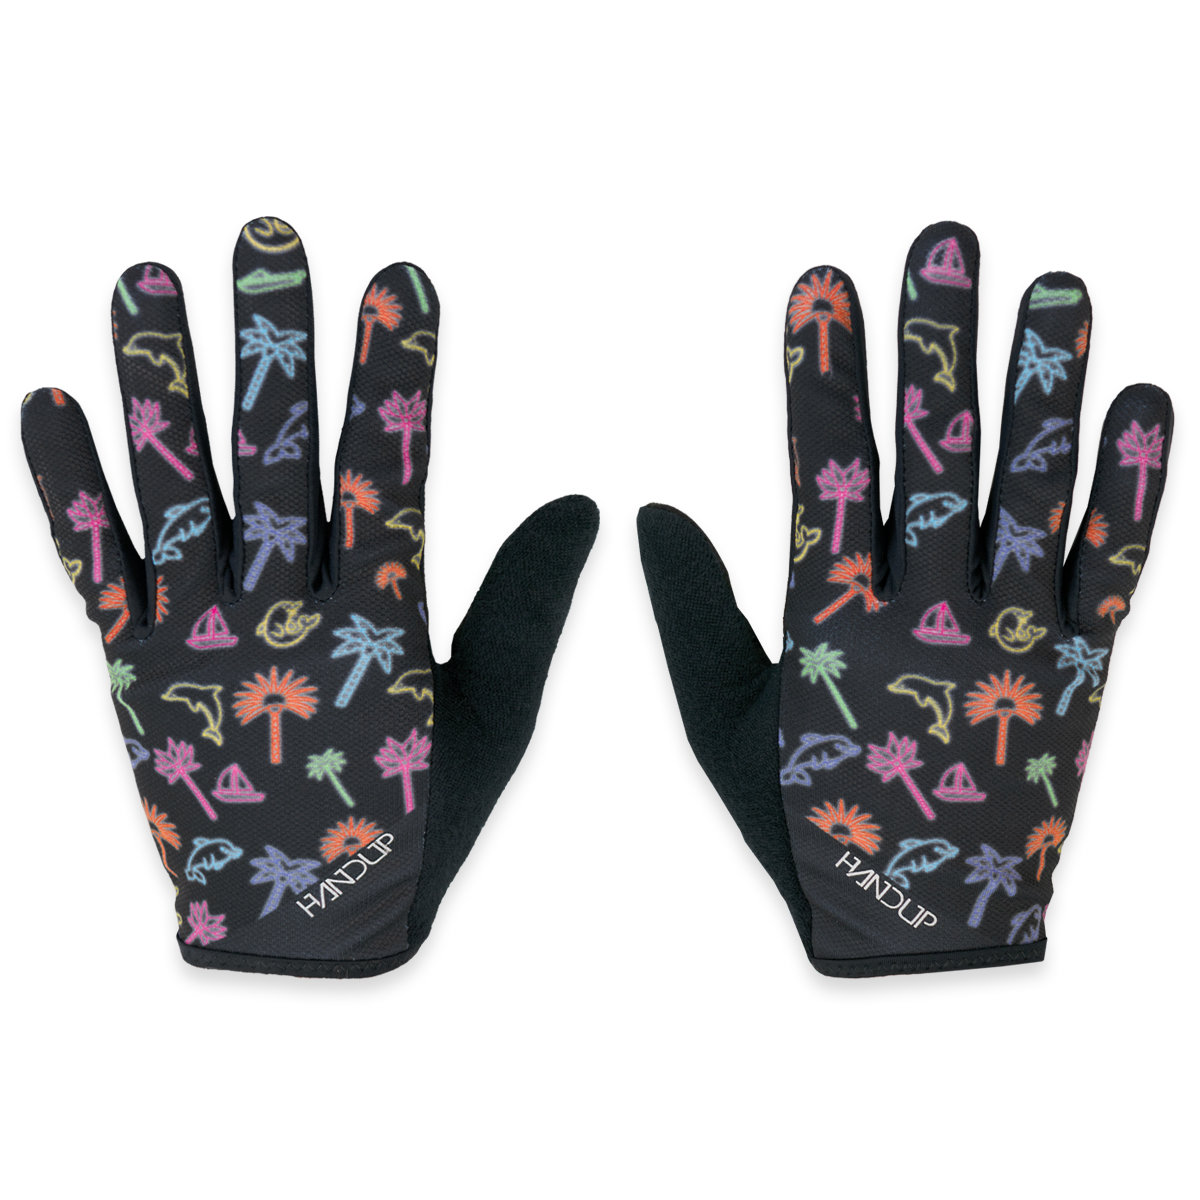 Gloves - Neon Lights